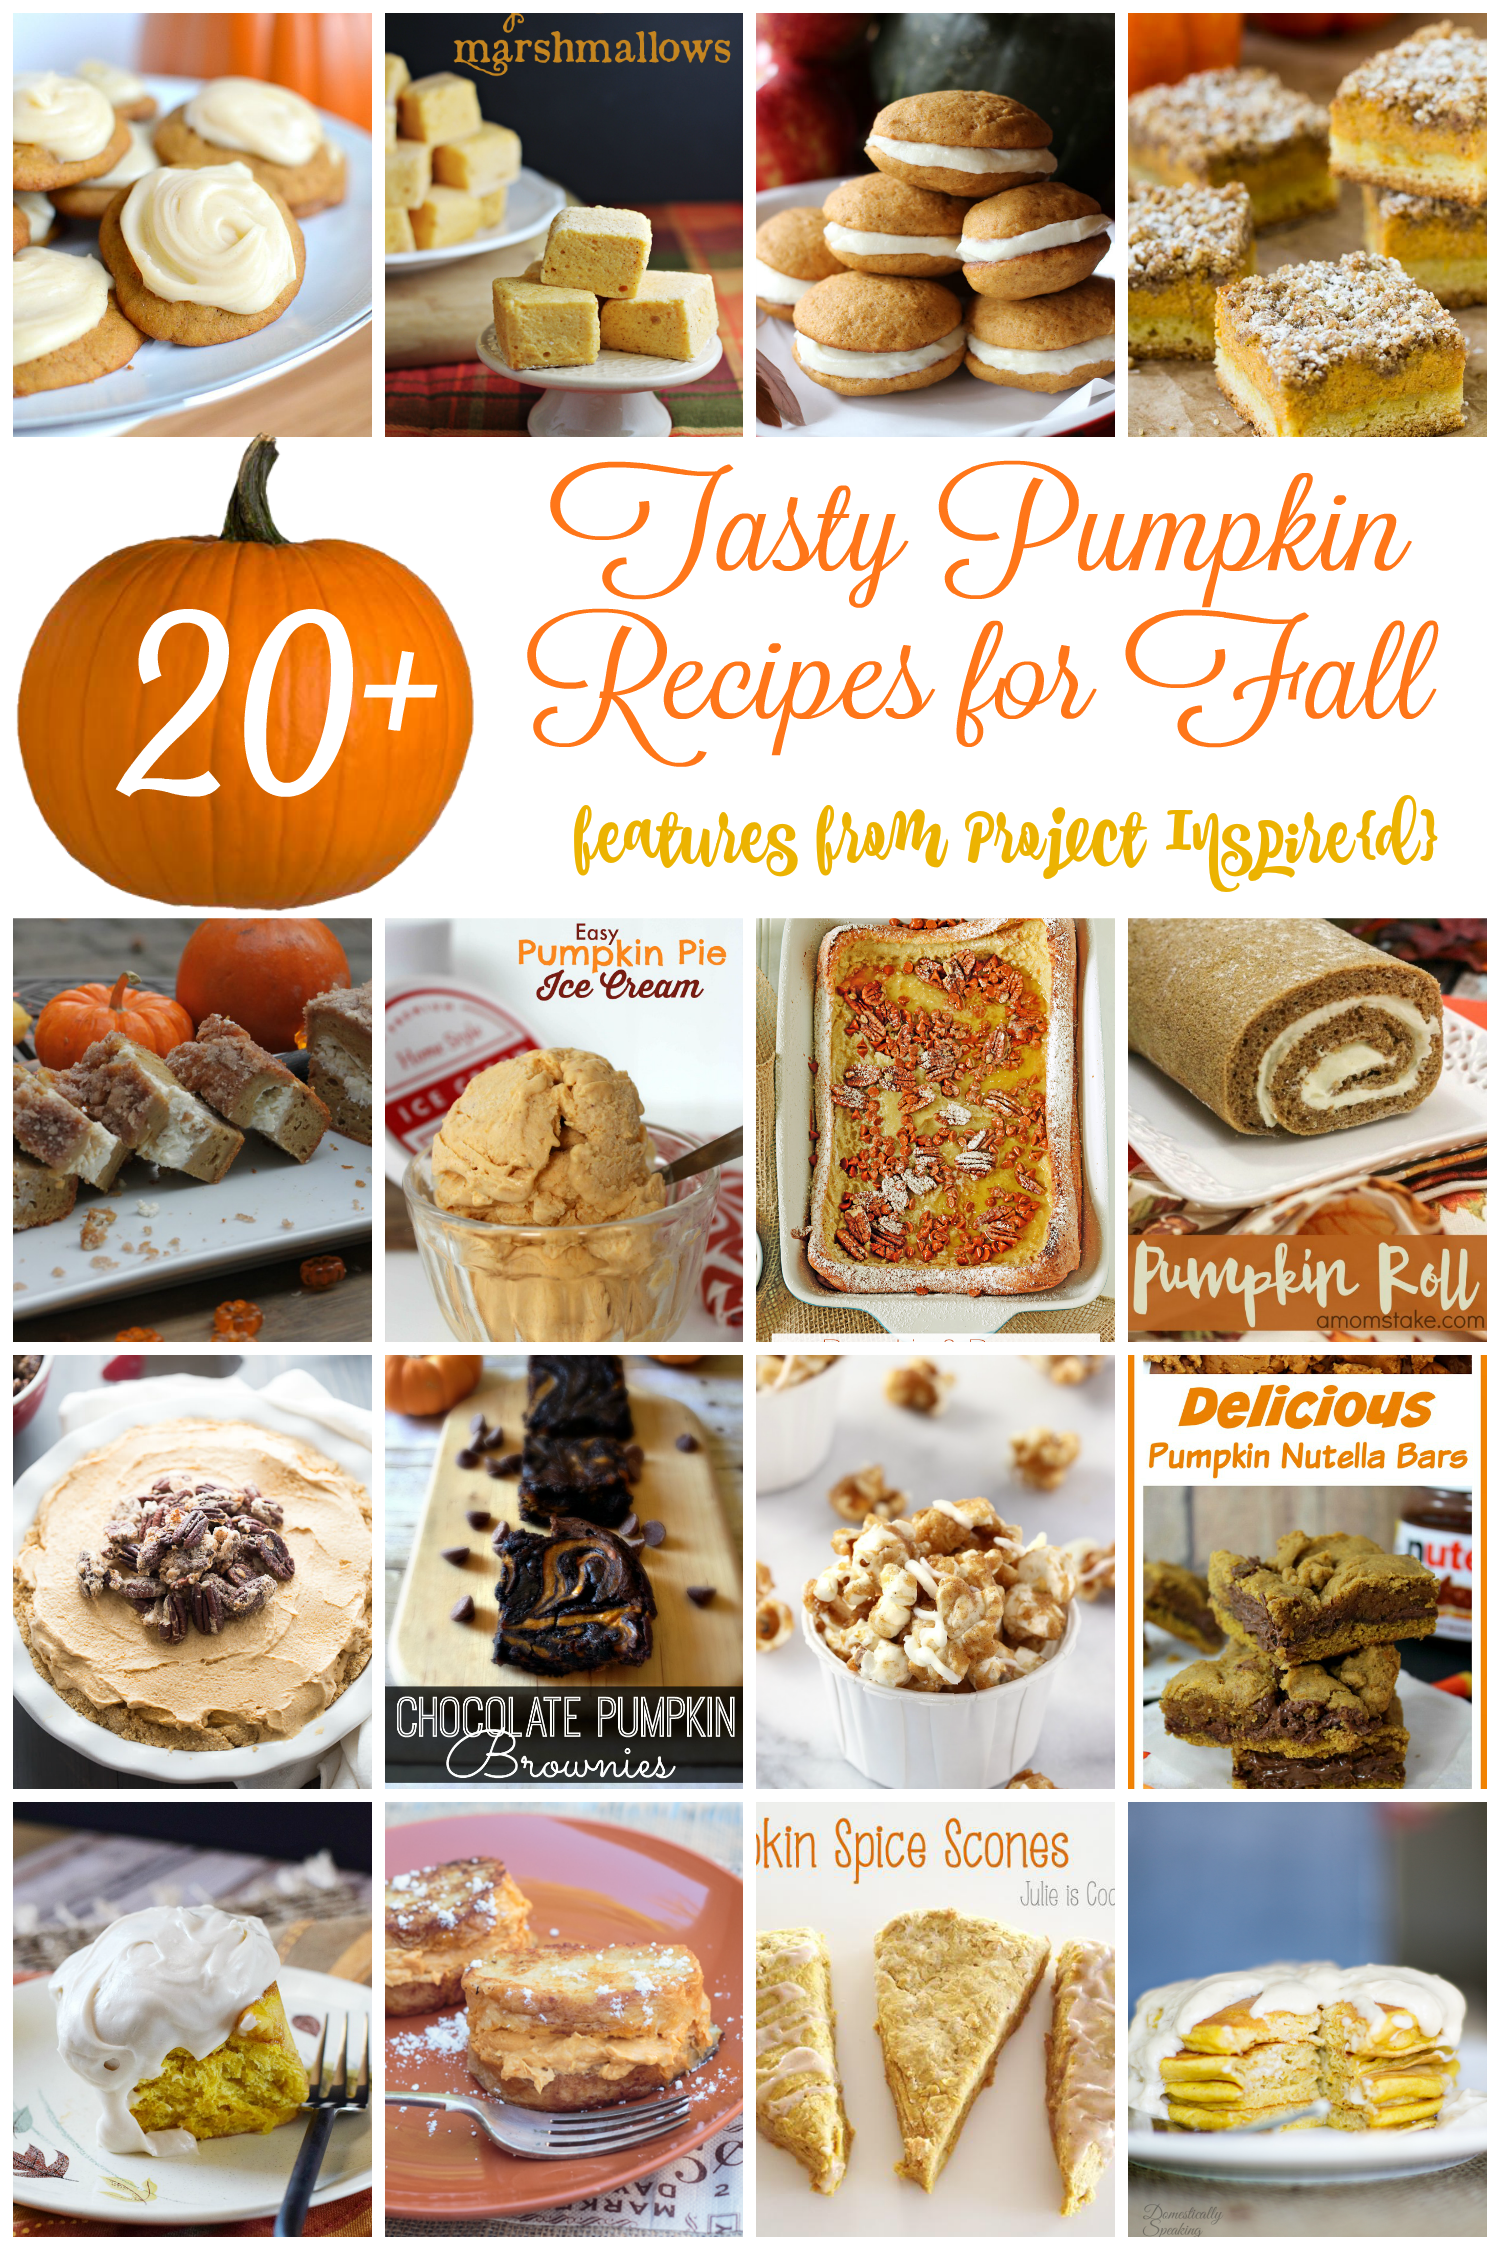 20+ Tasty Pumpkin Recipes for Fall